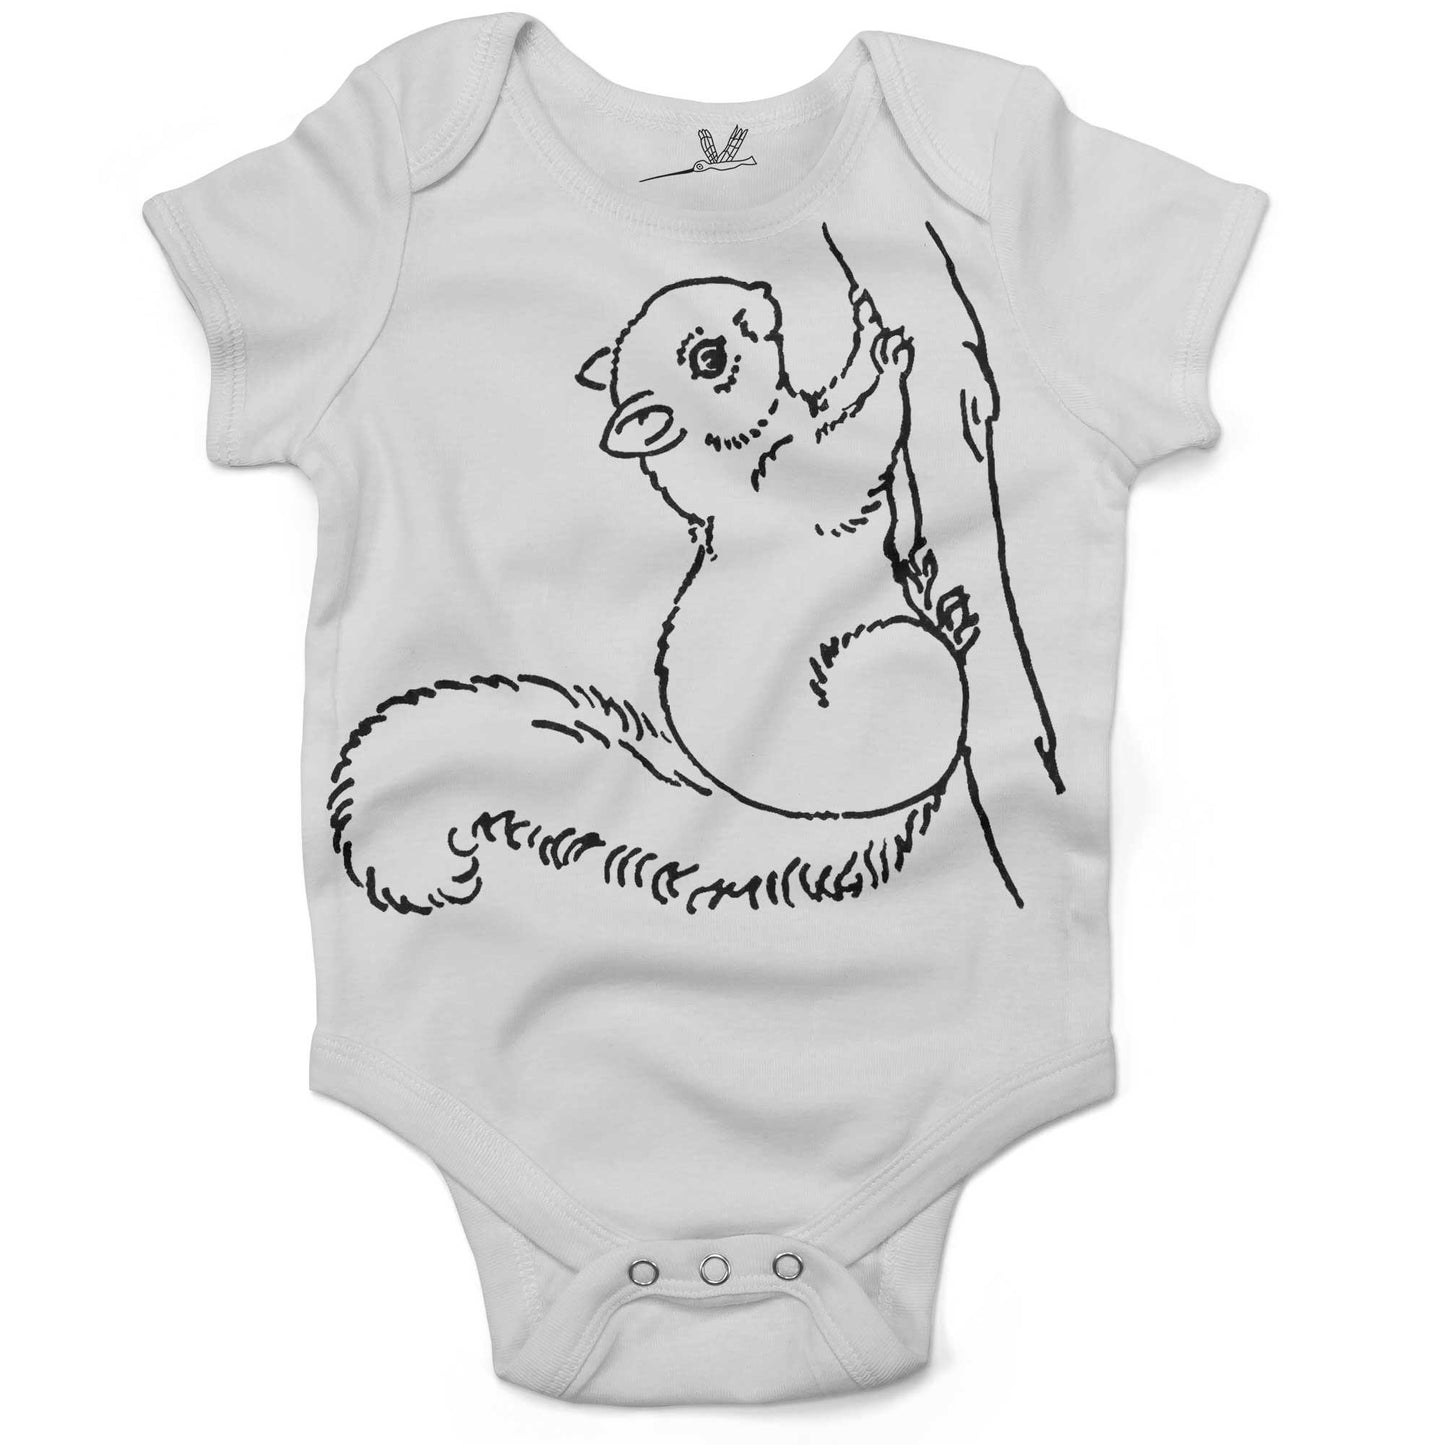 Super Cute Squirrel Infant Bodysuit or Raglan Baby Tee-White-3-6 months